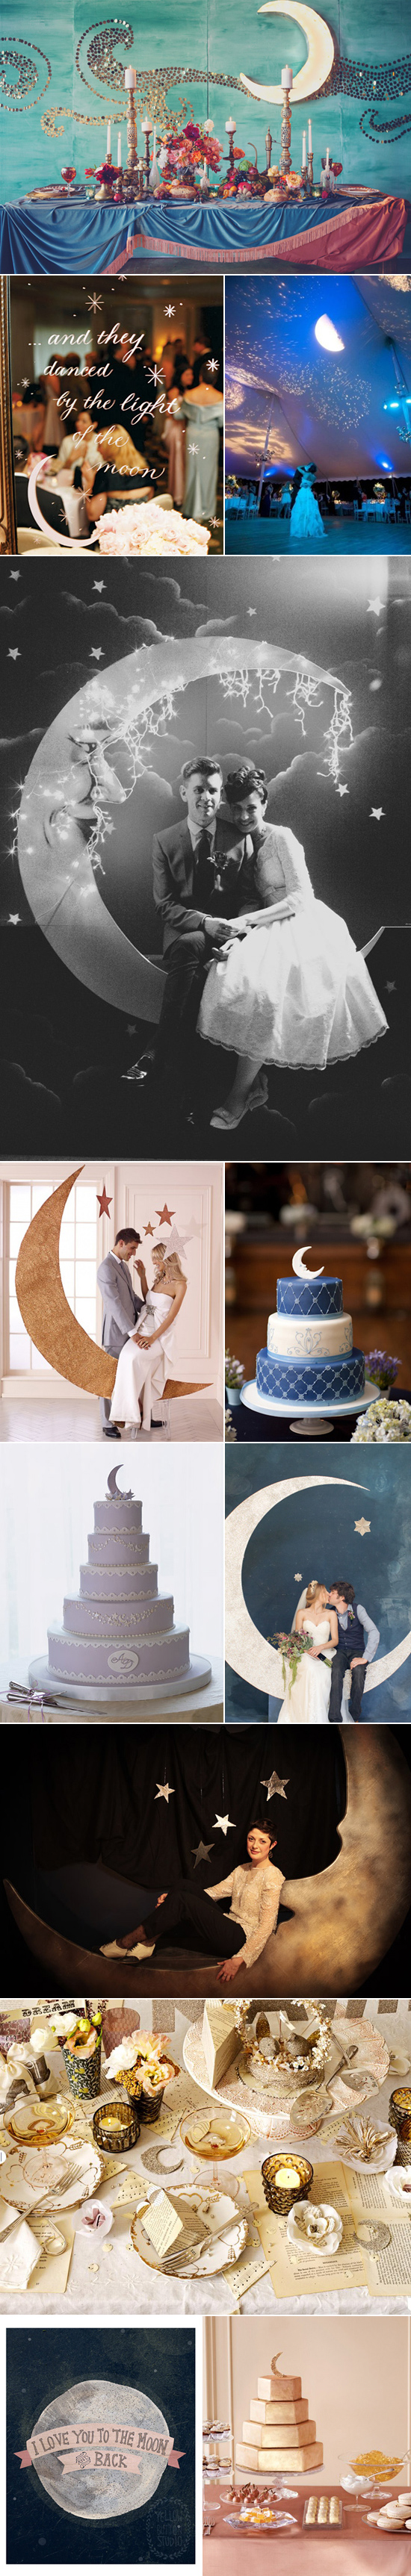 moon wedding inspiration